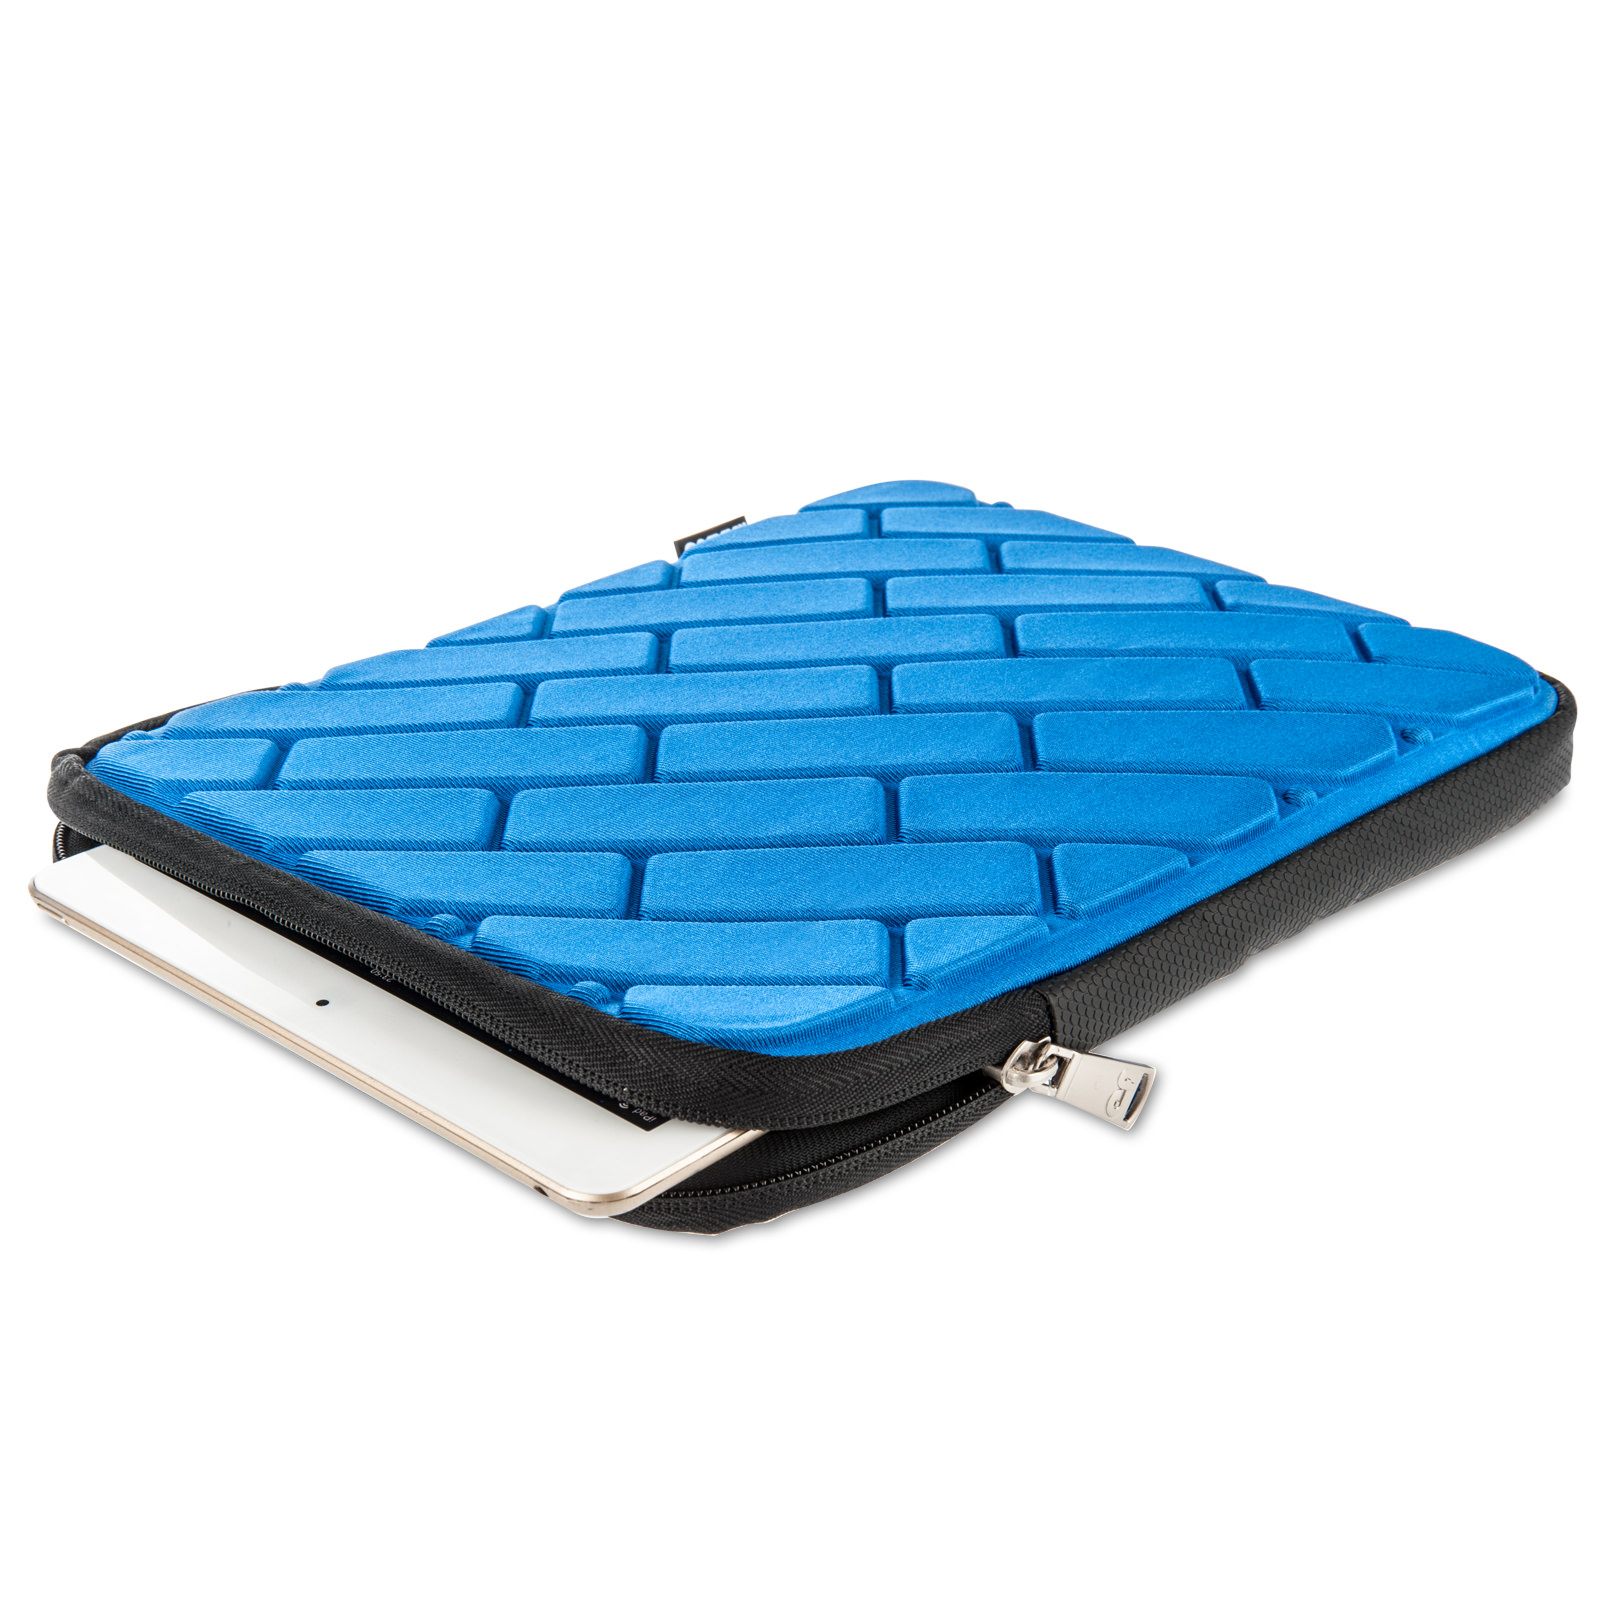 Caseflex Brick Pattern iPad Pouch - Blue 